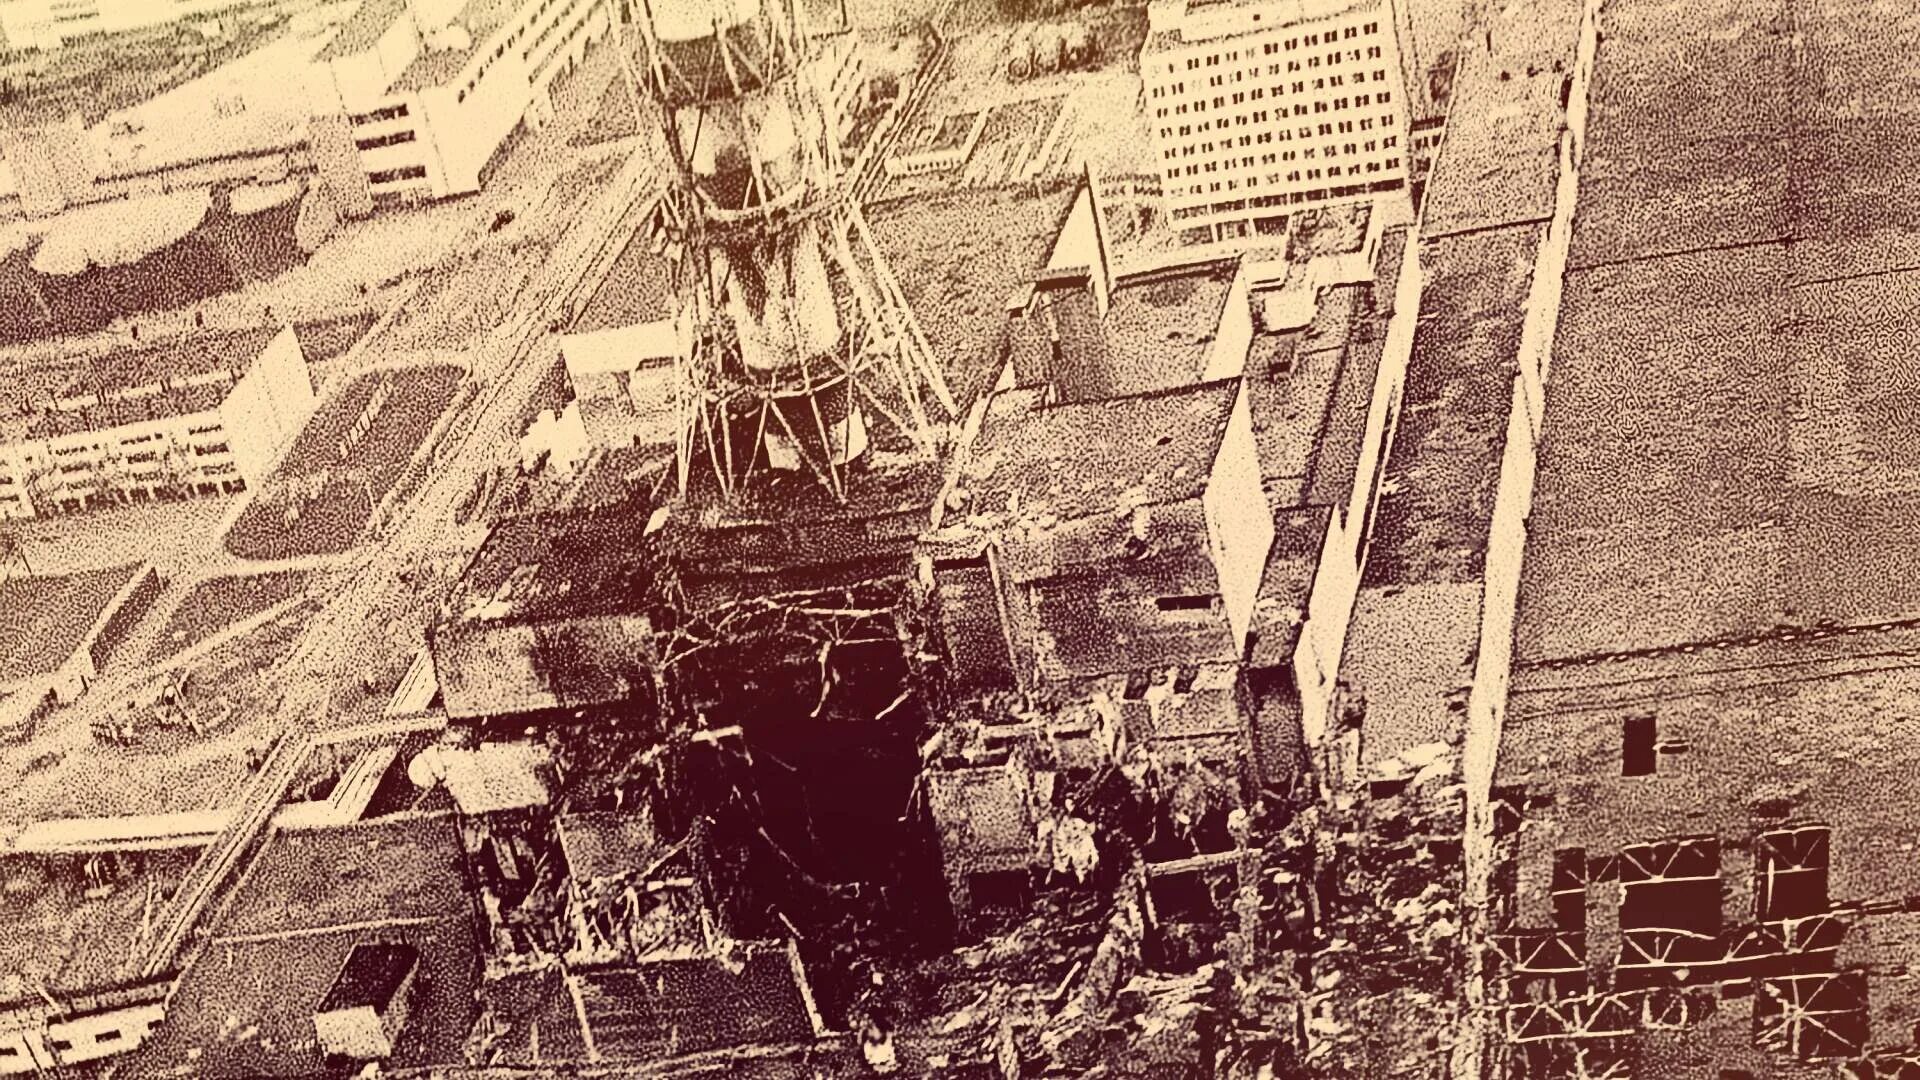 Катастрофа на аэс 1986. 4 Энергоблок ЧАЭС 1986. Авария на ЧАЭС 1986. Чернобыльская АЭС 1986 реактор. Взрыв 4 энергоблока ЧАЭС.